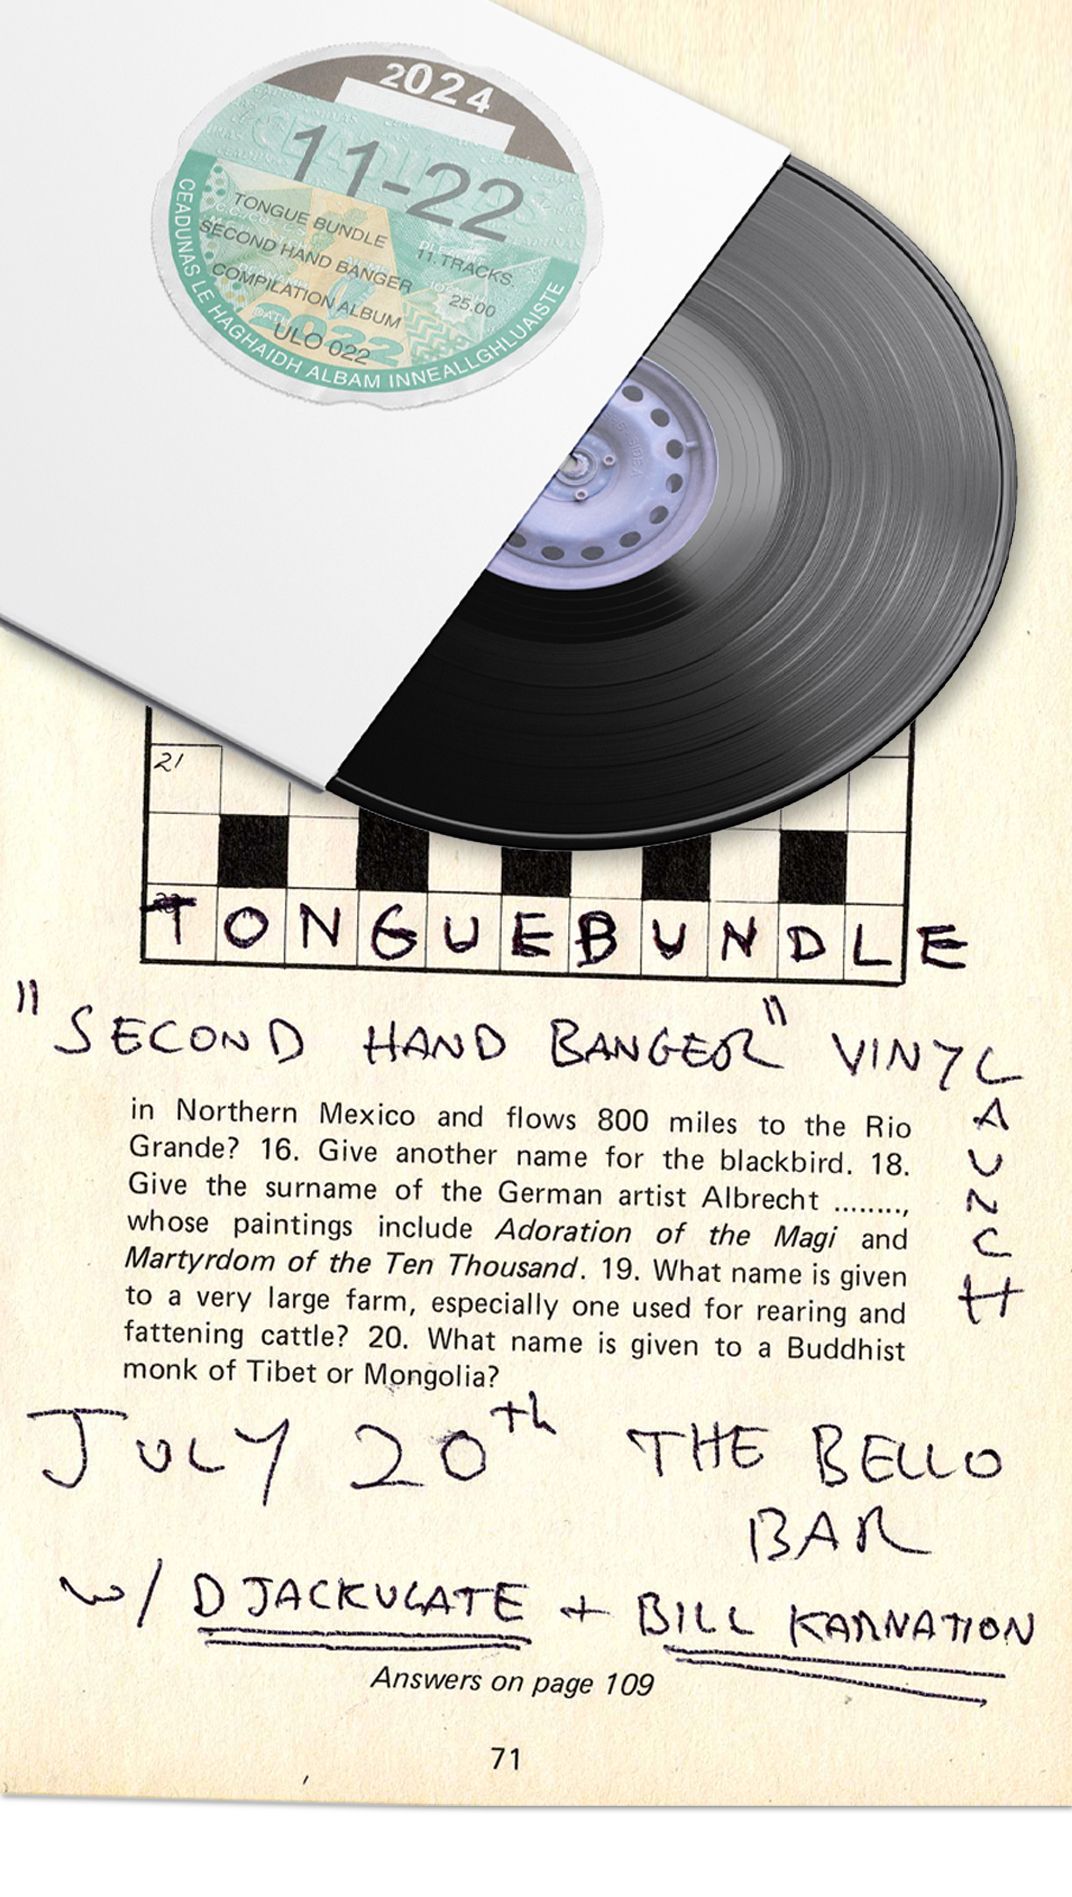 'Second Hand Banger' Vinyl release party w\/Djackulate & Bill Karnation